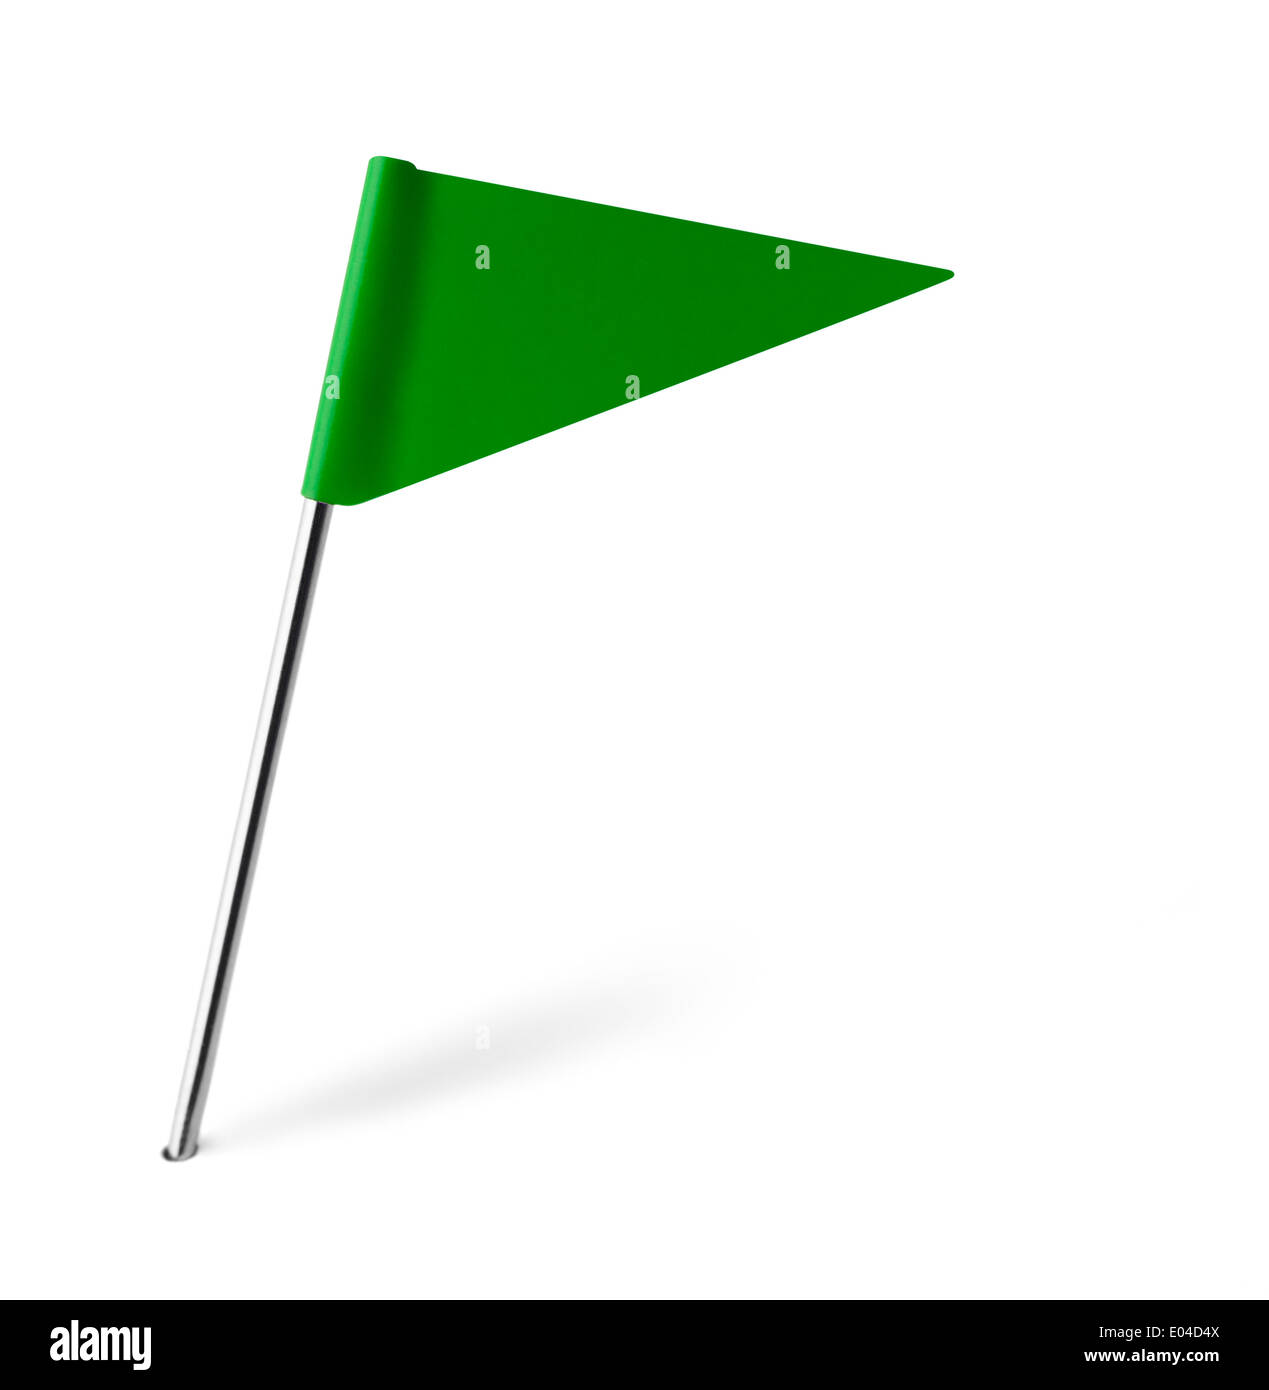 Grünes Dreieck Flagge, Isolated on White Background Stockfotografie - Alamy